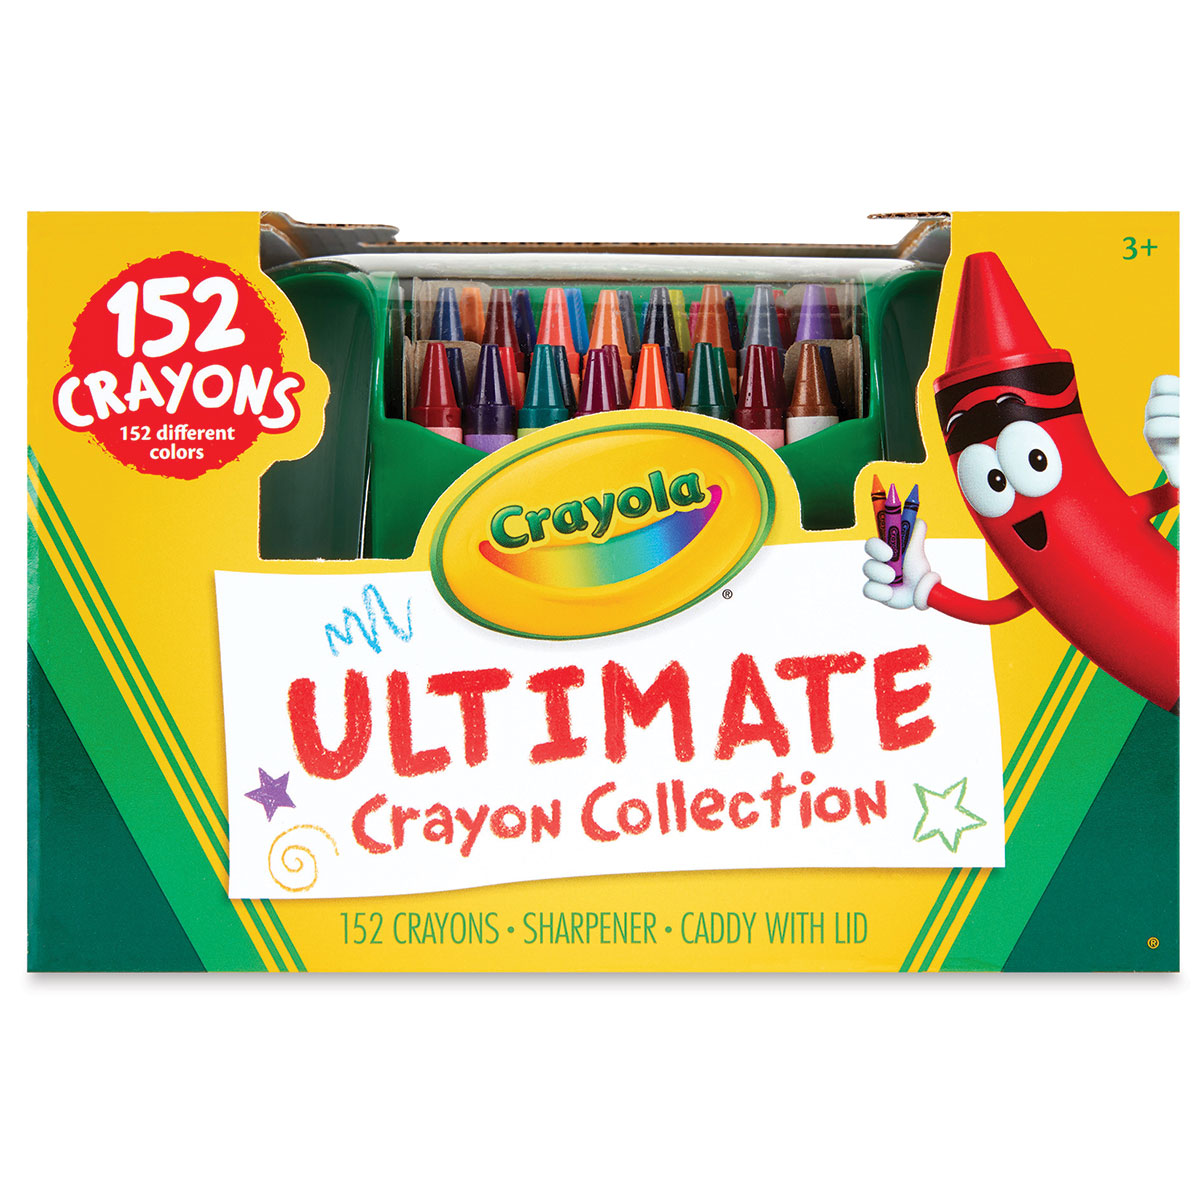 Carnation Pink Crayola Crayons - 10 Pack